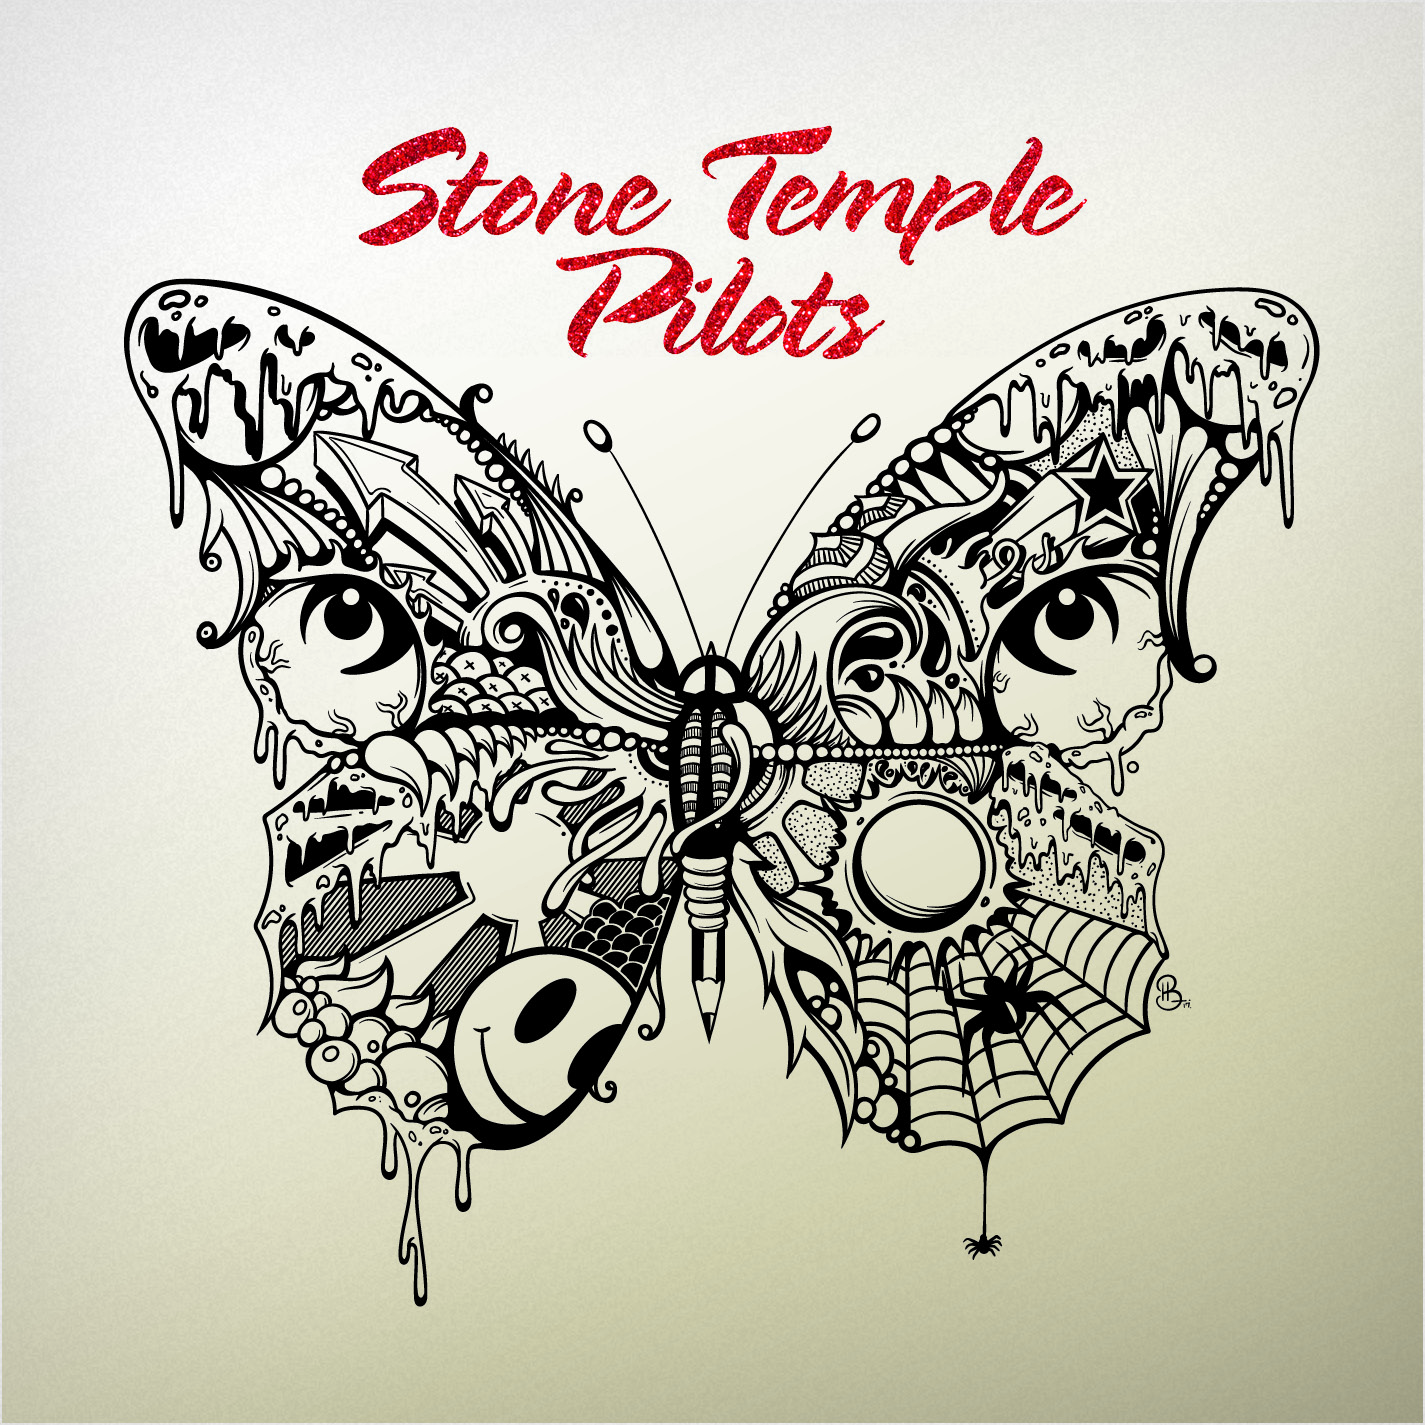 Stone Temple Pilots (USA) – Stone Temple Pilots